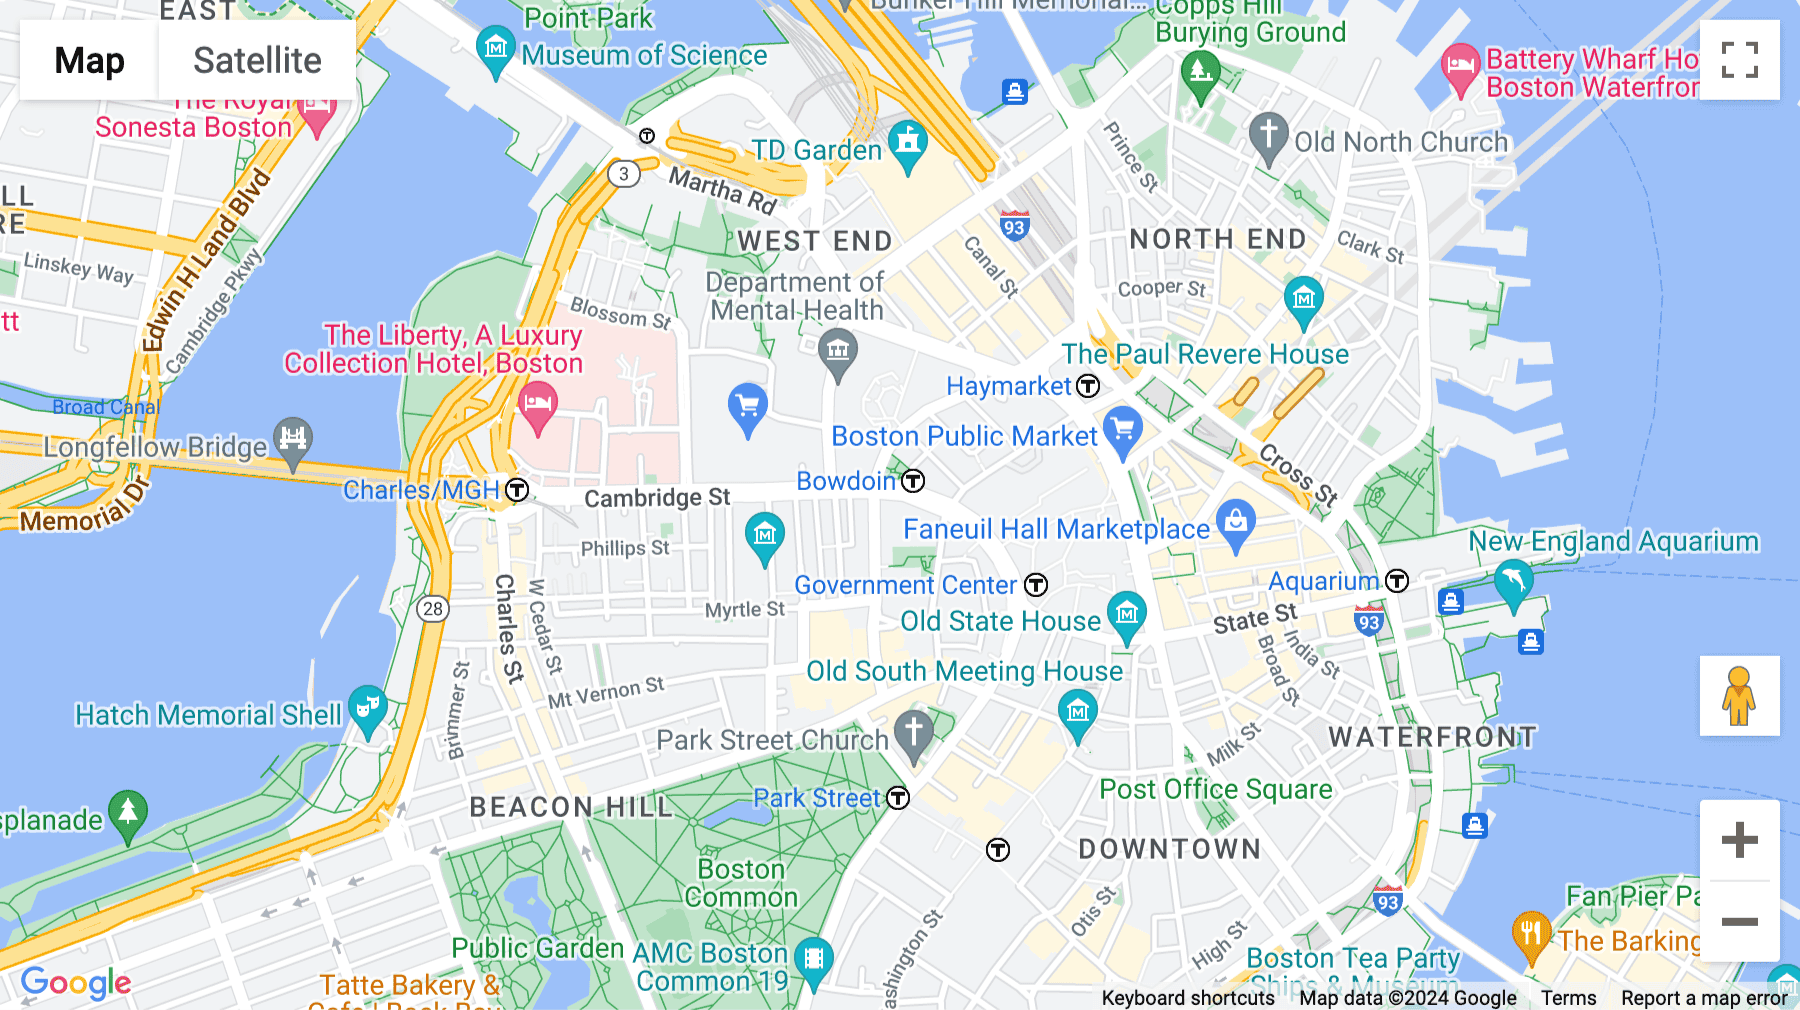 Click for interative map of 100 Cambridge Street, 14th Floor, The Leverett Saltonstall Building, Boston